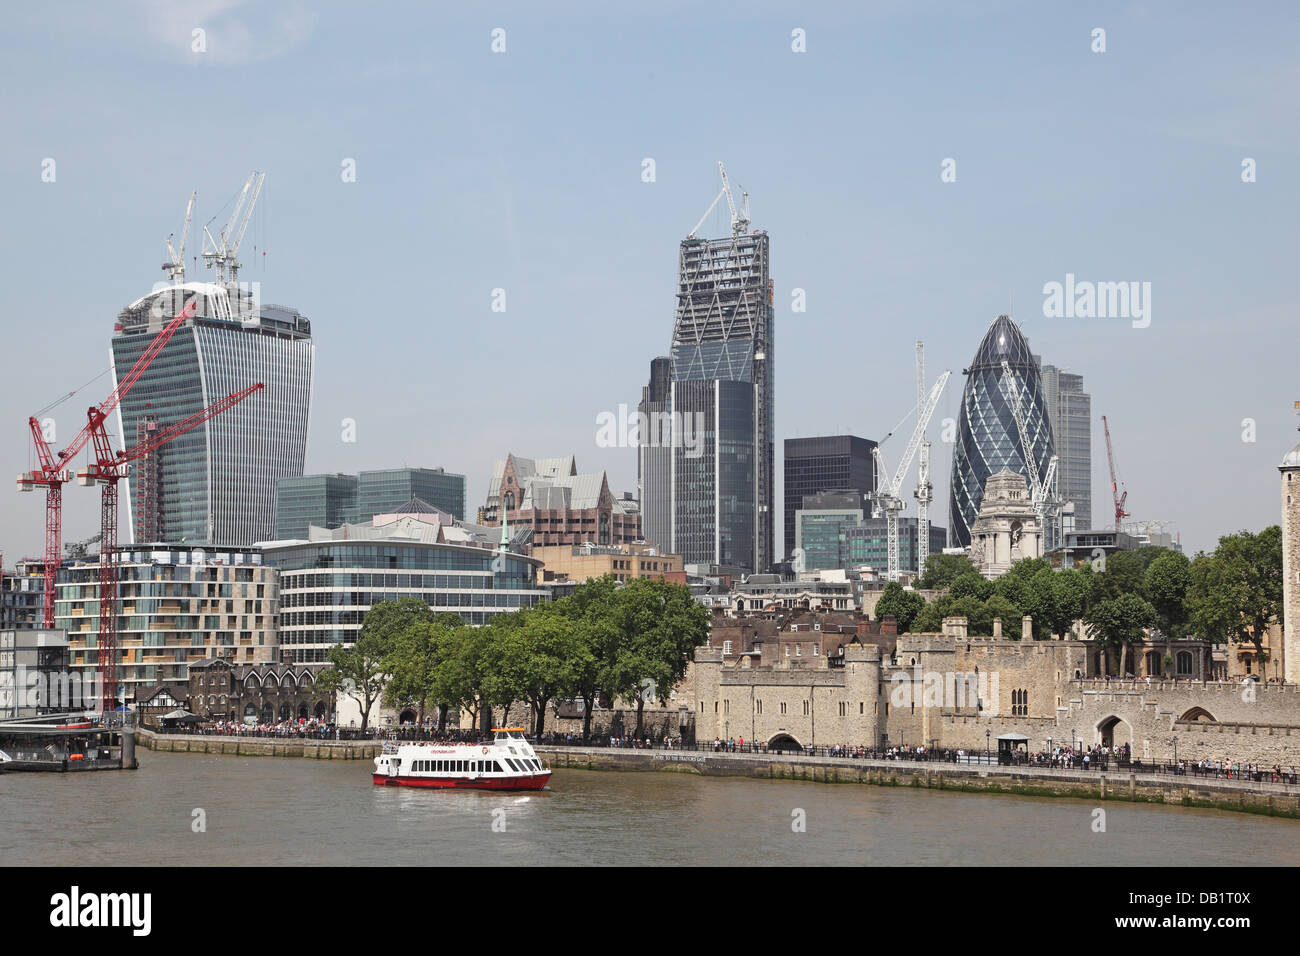 London skyline della città mostra 20 Fenchurch Street "walkie-talkie" e 122 Leadenhall Street - il 'Cheesegrater' Foto Stock